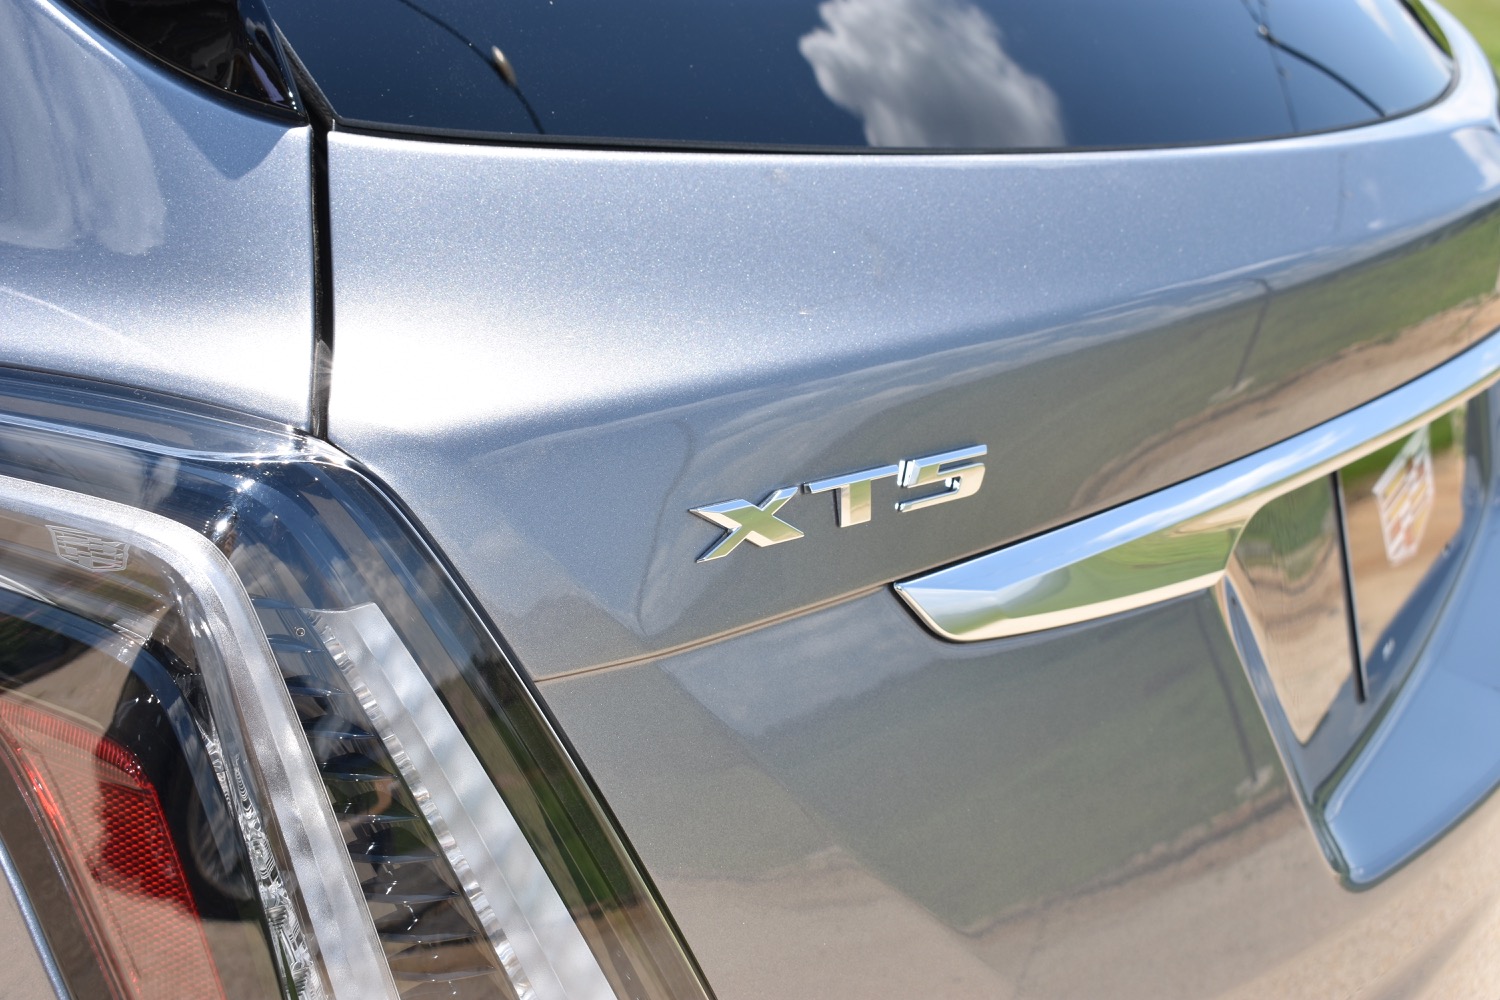 2020 cadillac xt5 gains turbo four engine sport model